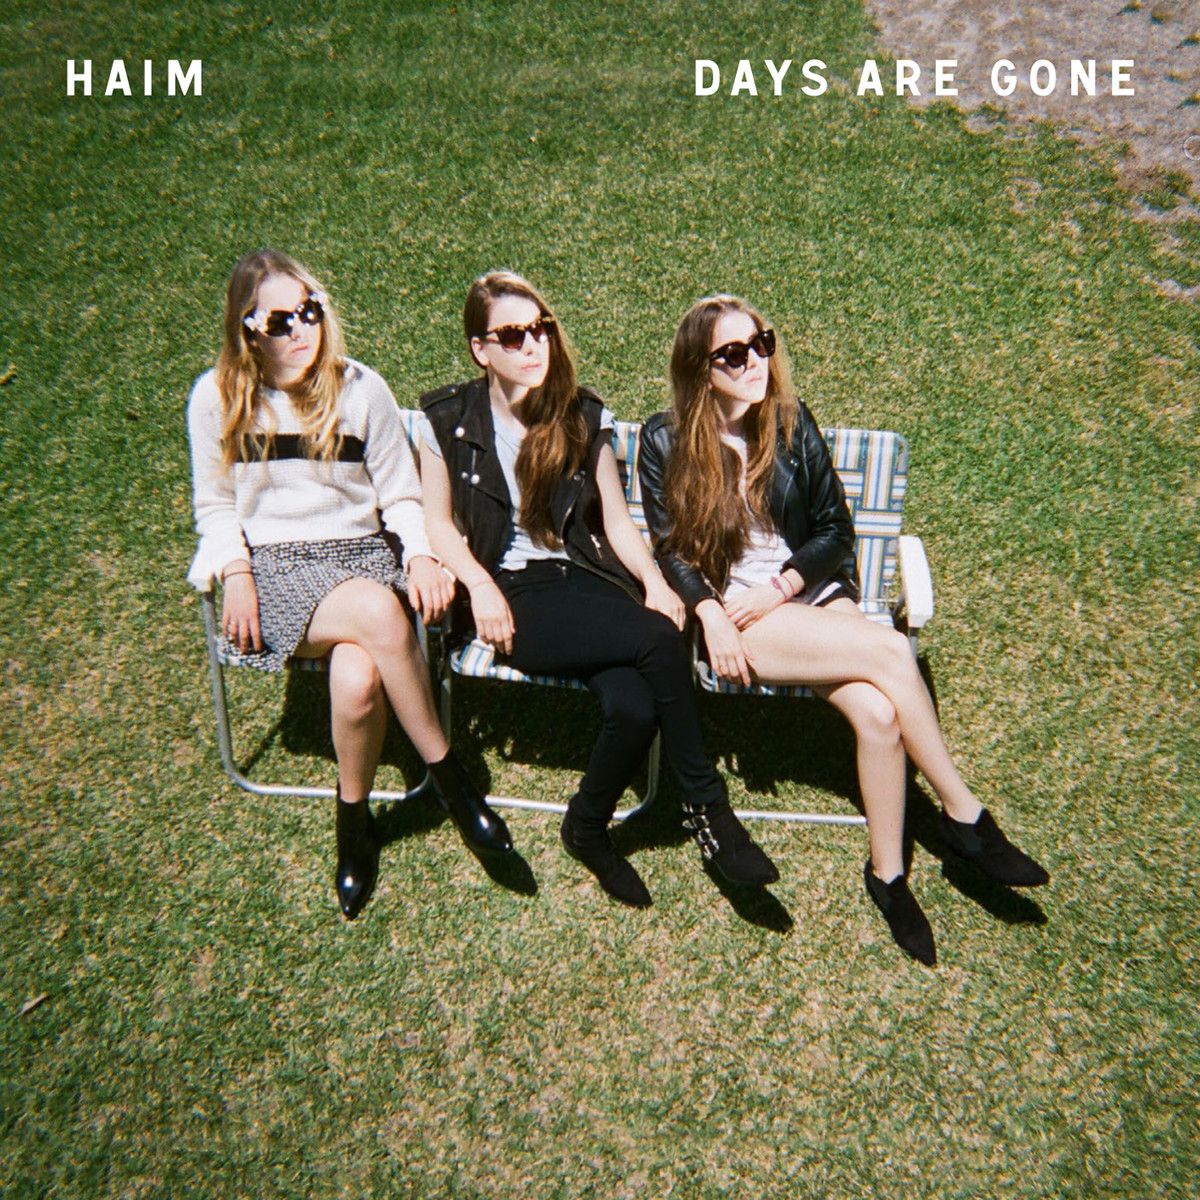 Haim’s Days Are Gone album cover.